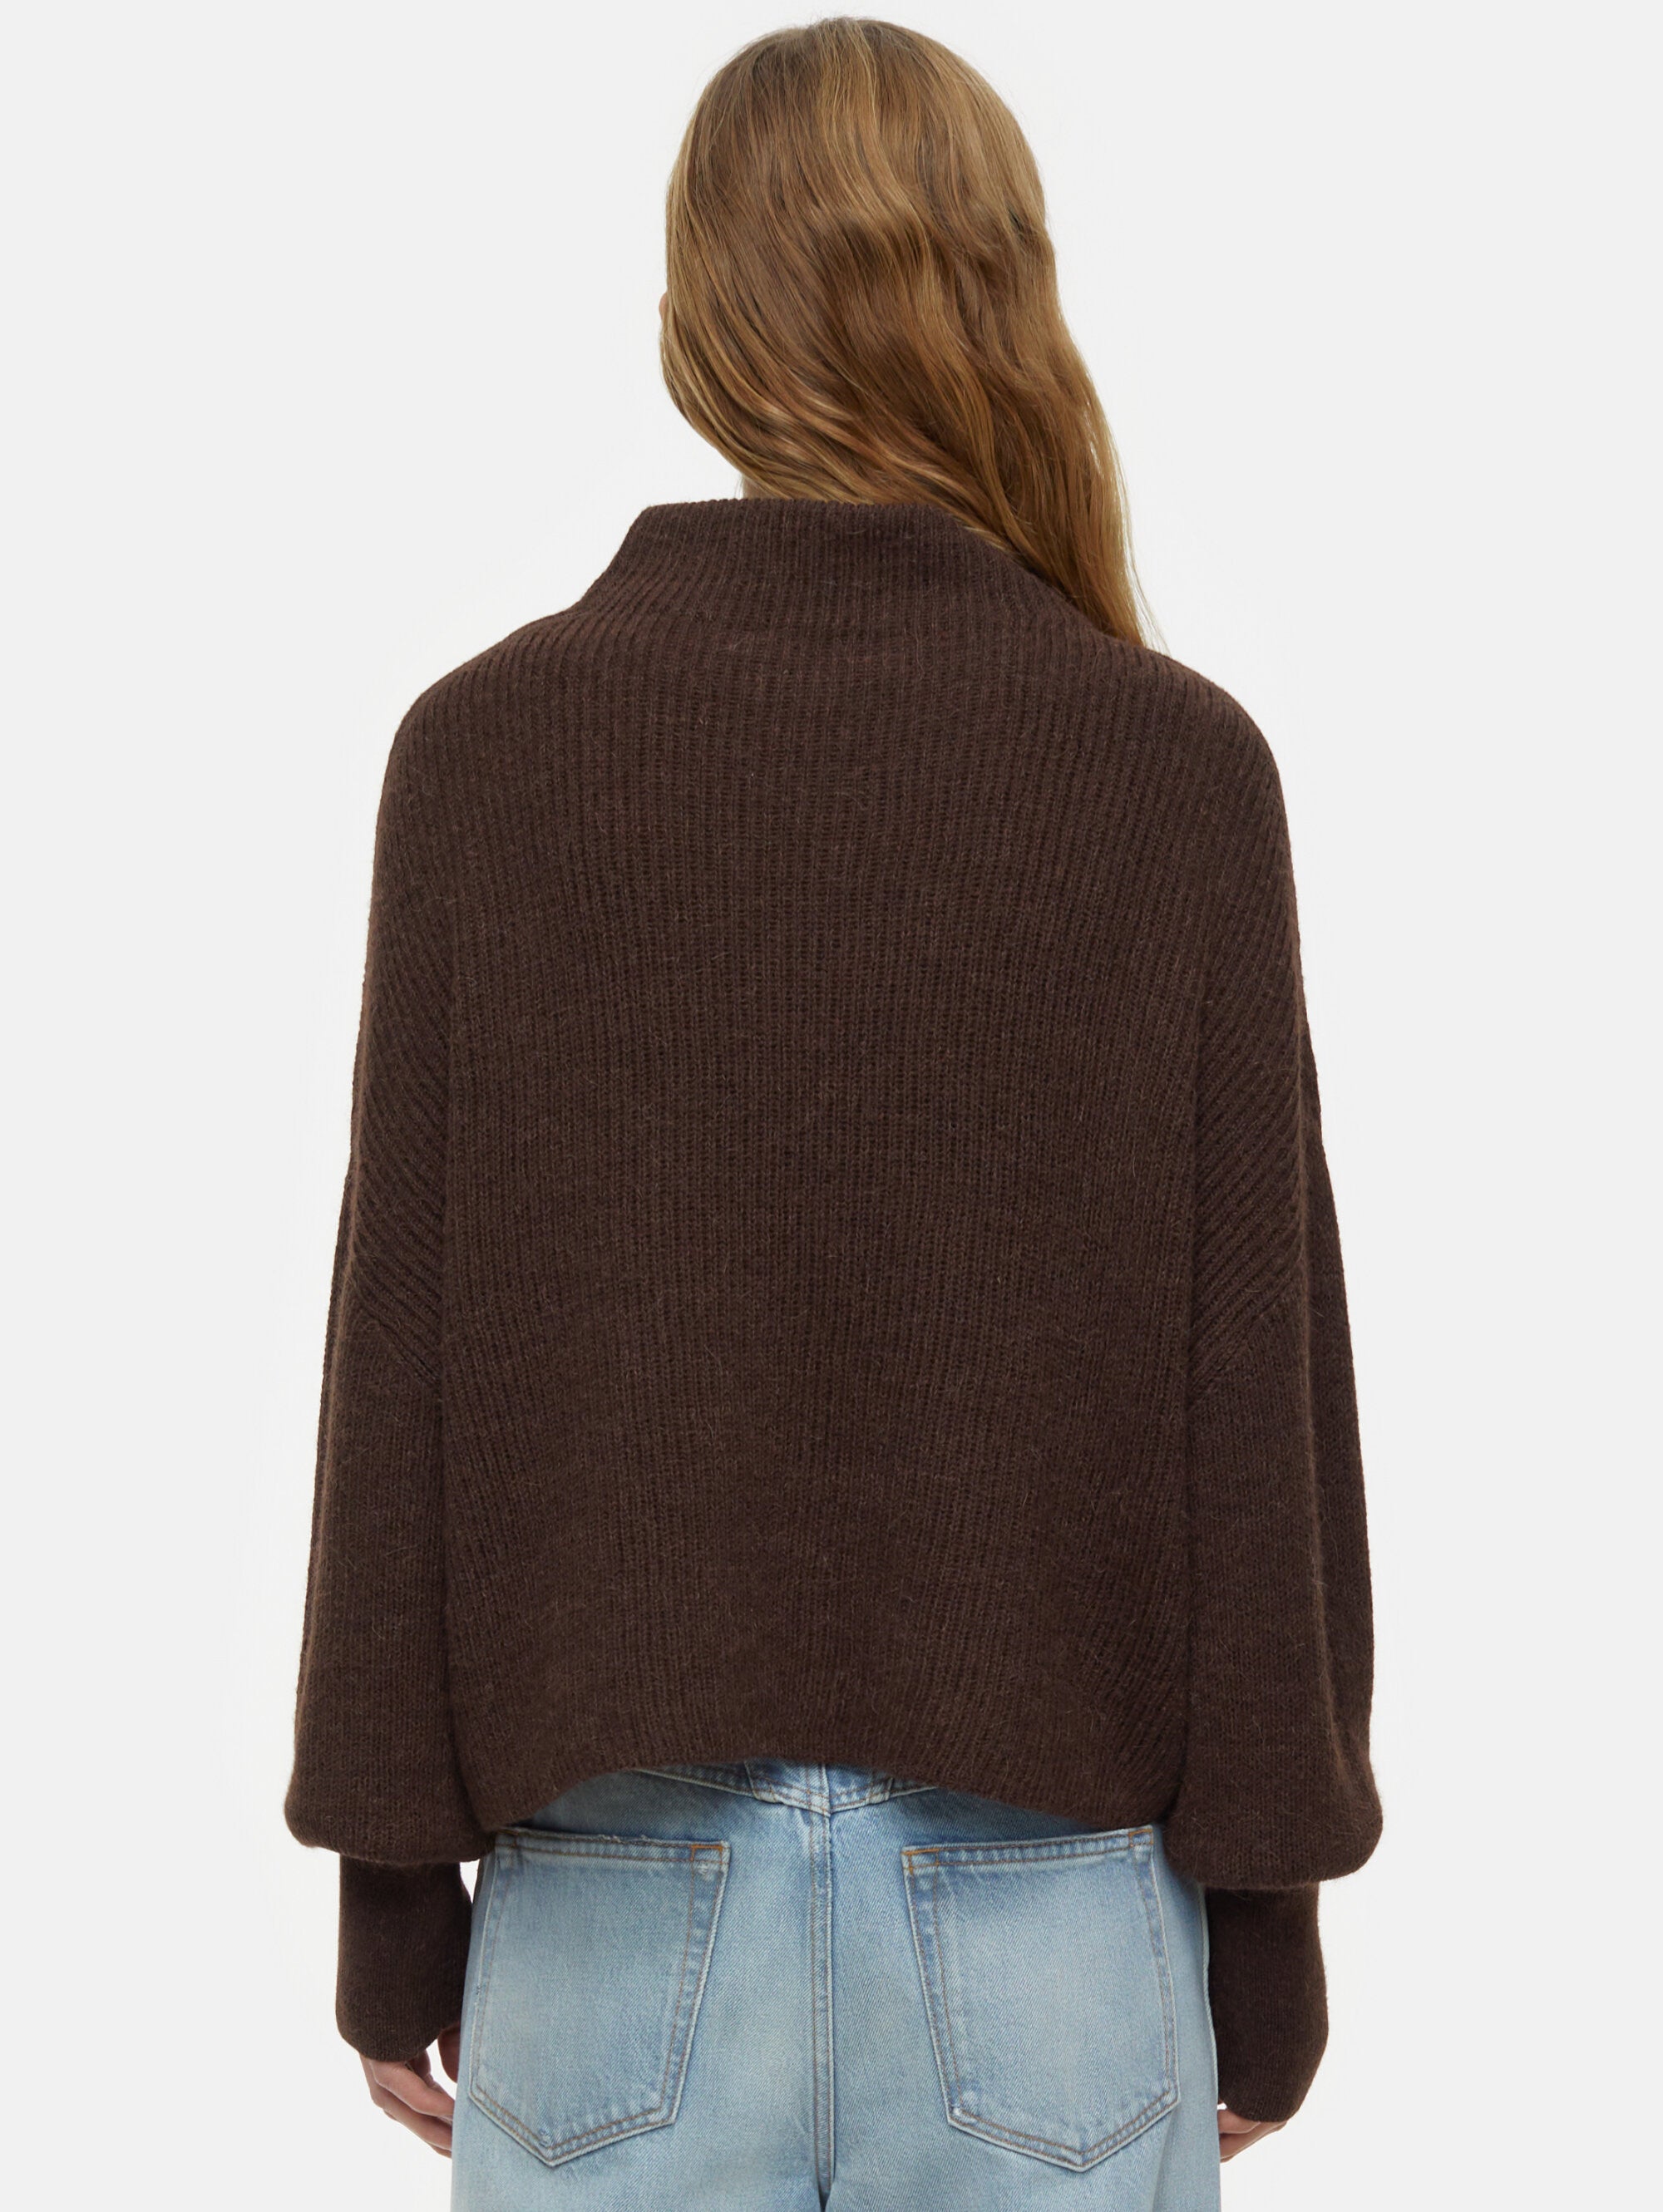 Mandarin collar sweater in brown alpaca